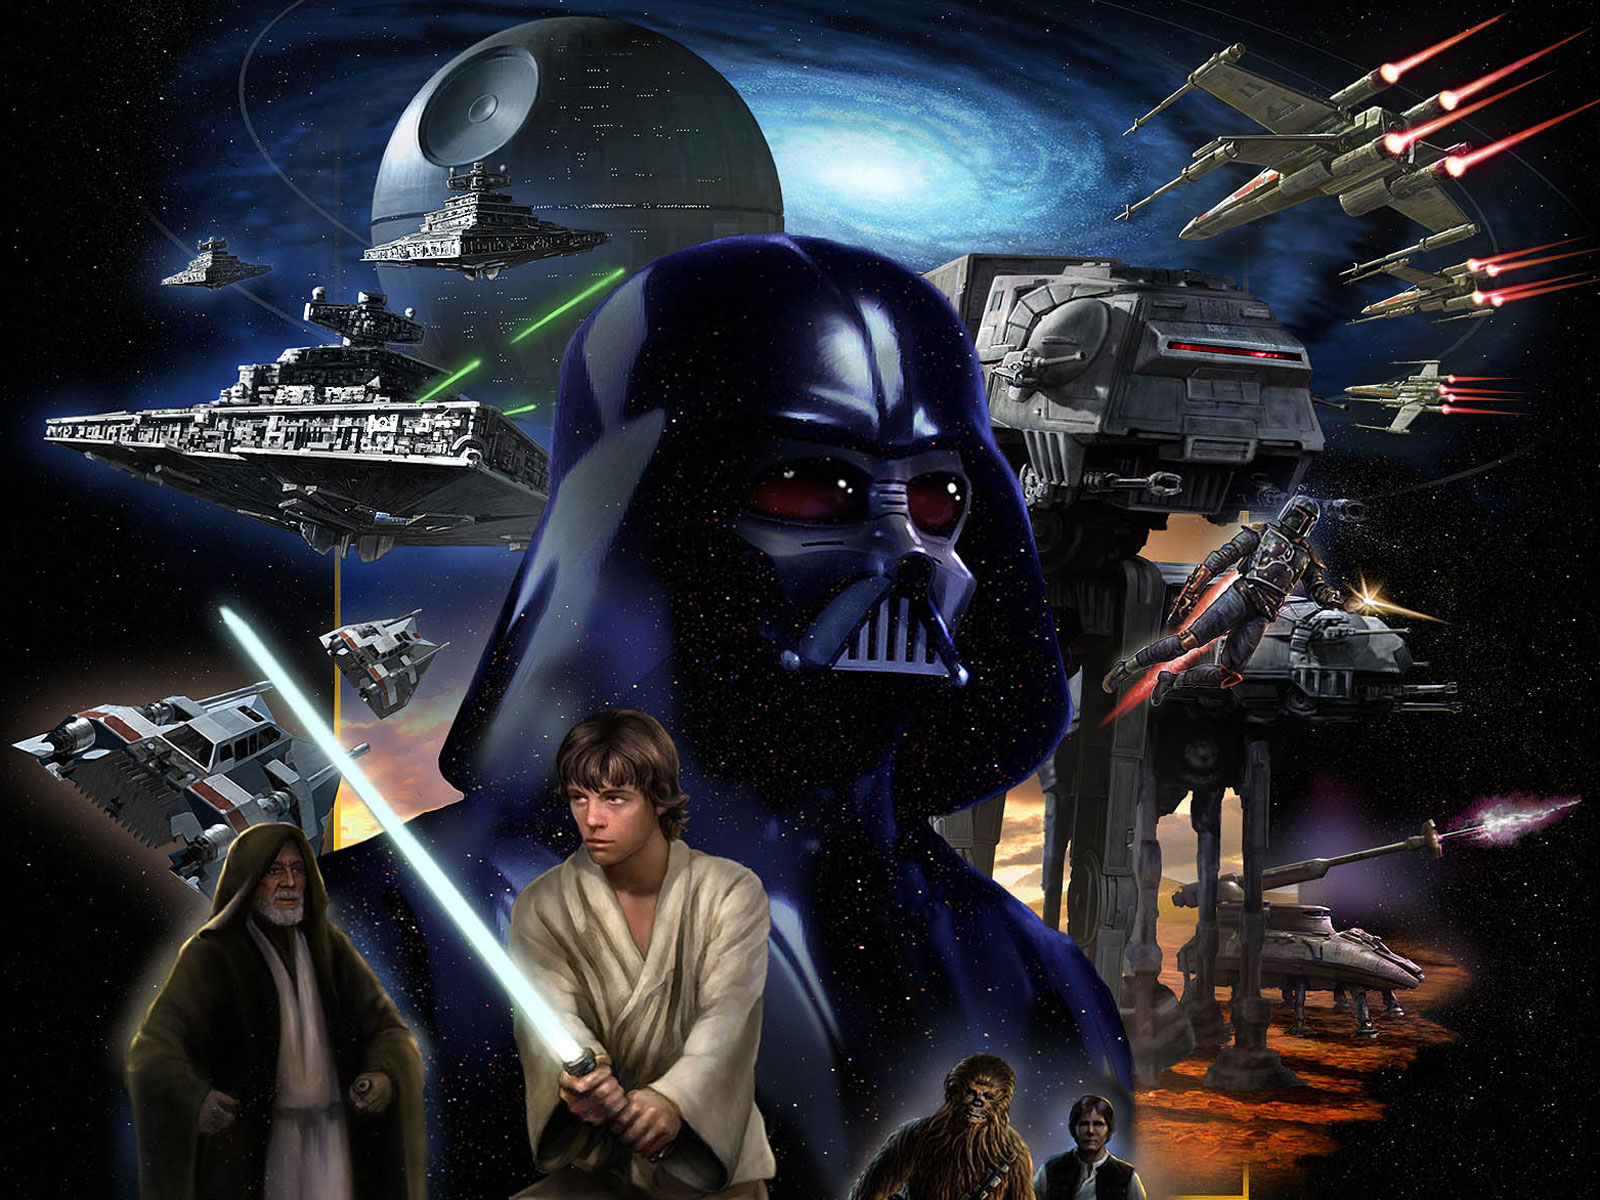 HD Wallpaper Star Wars Image